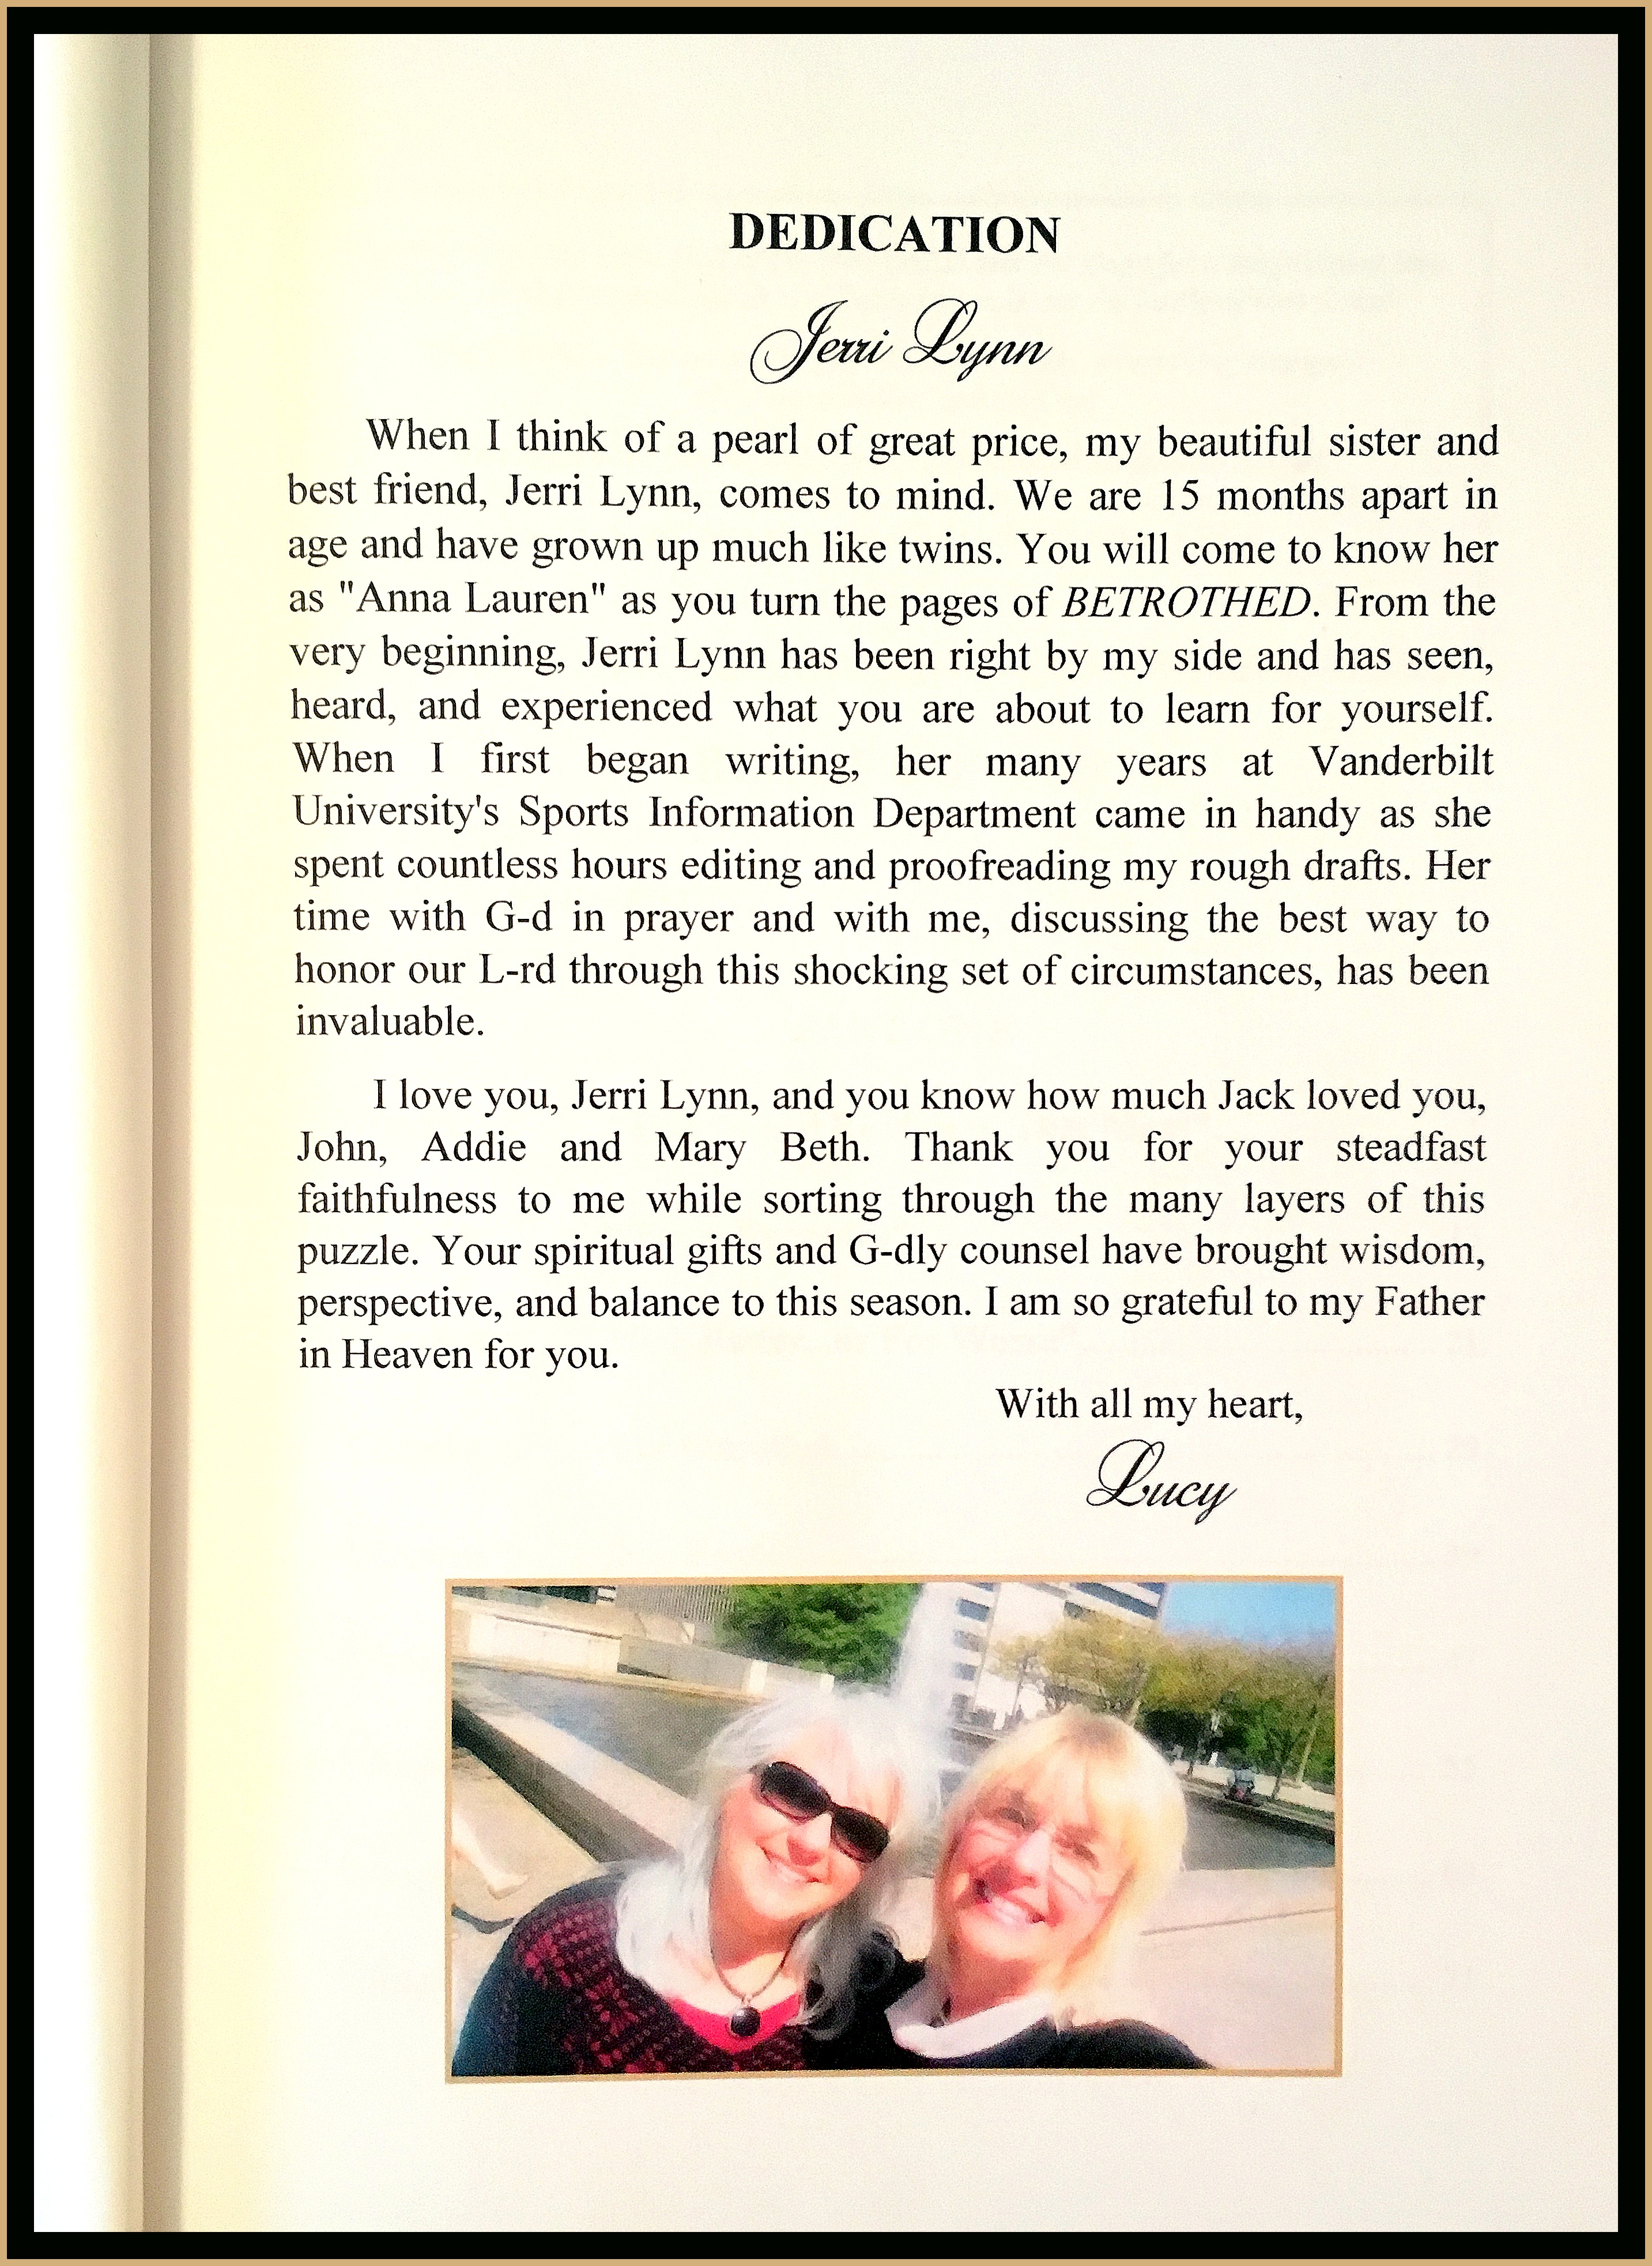 BETROTHED Dedication to Jerri Lynn framed in Gold for blog